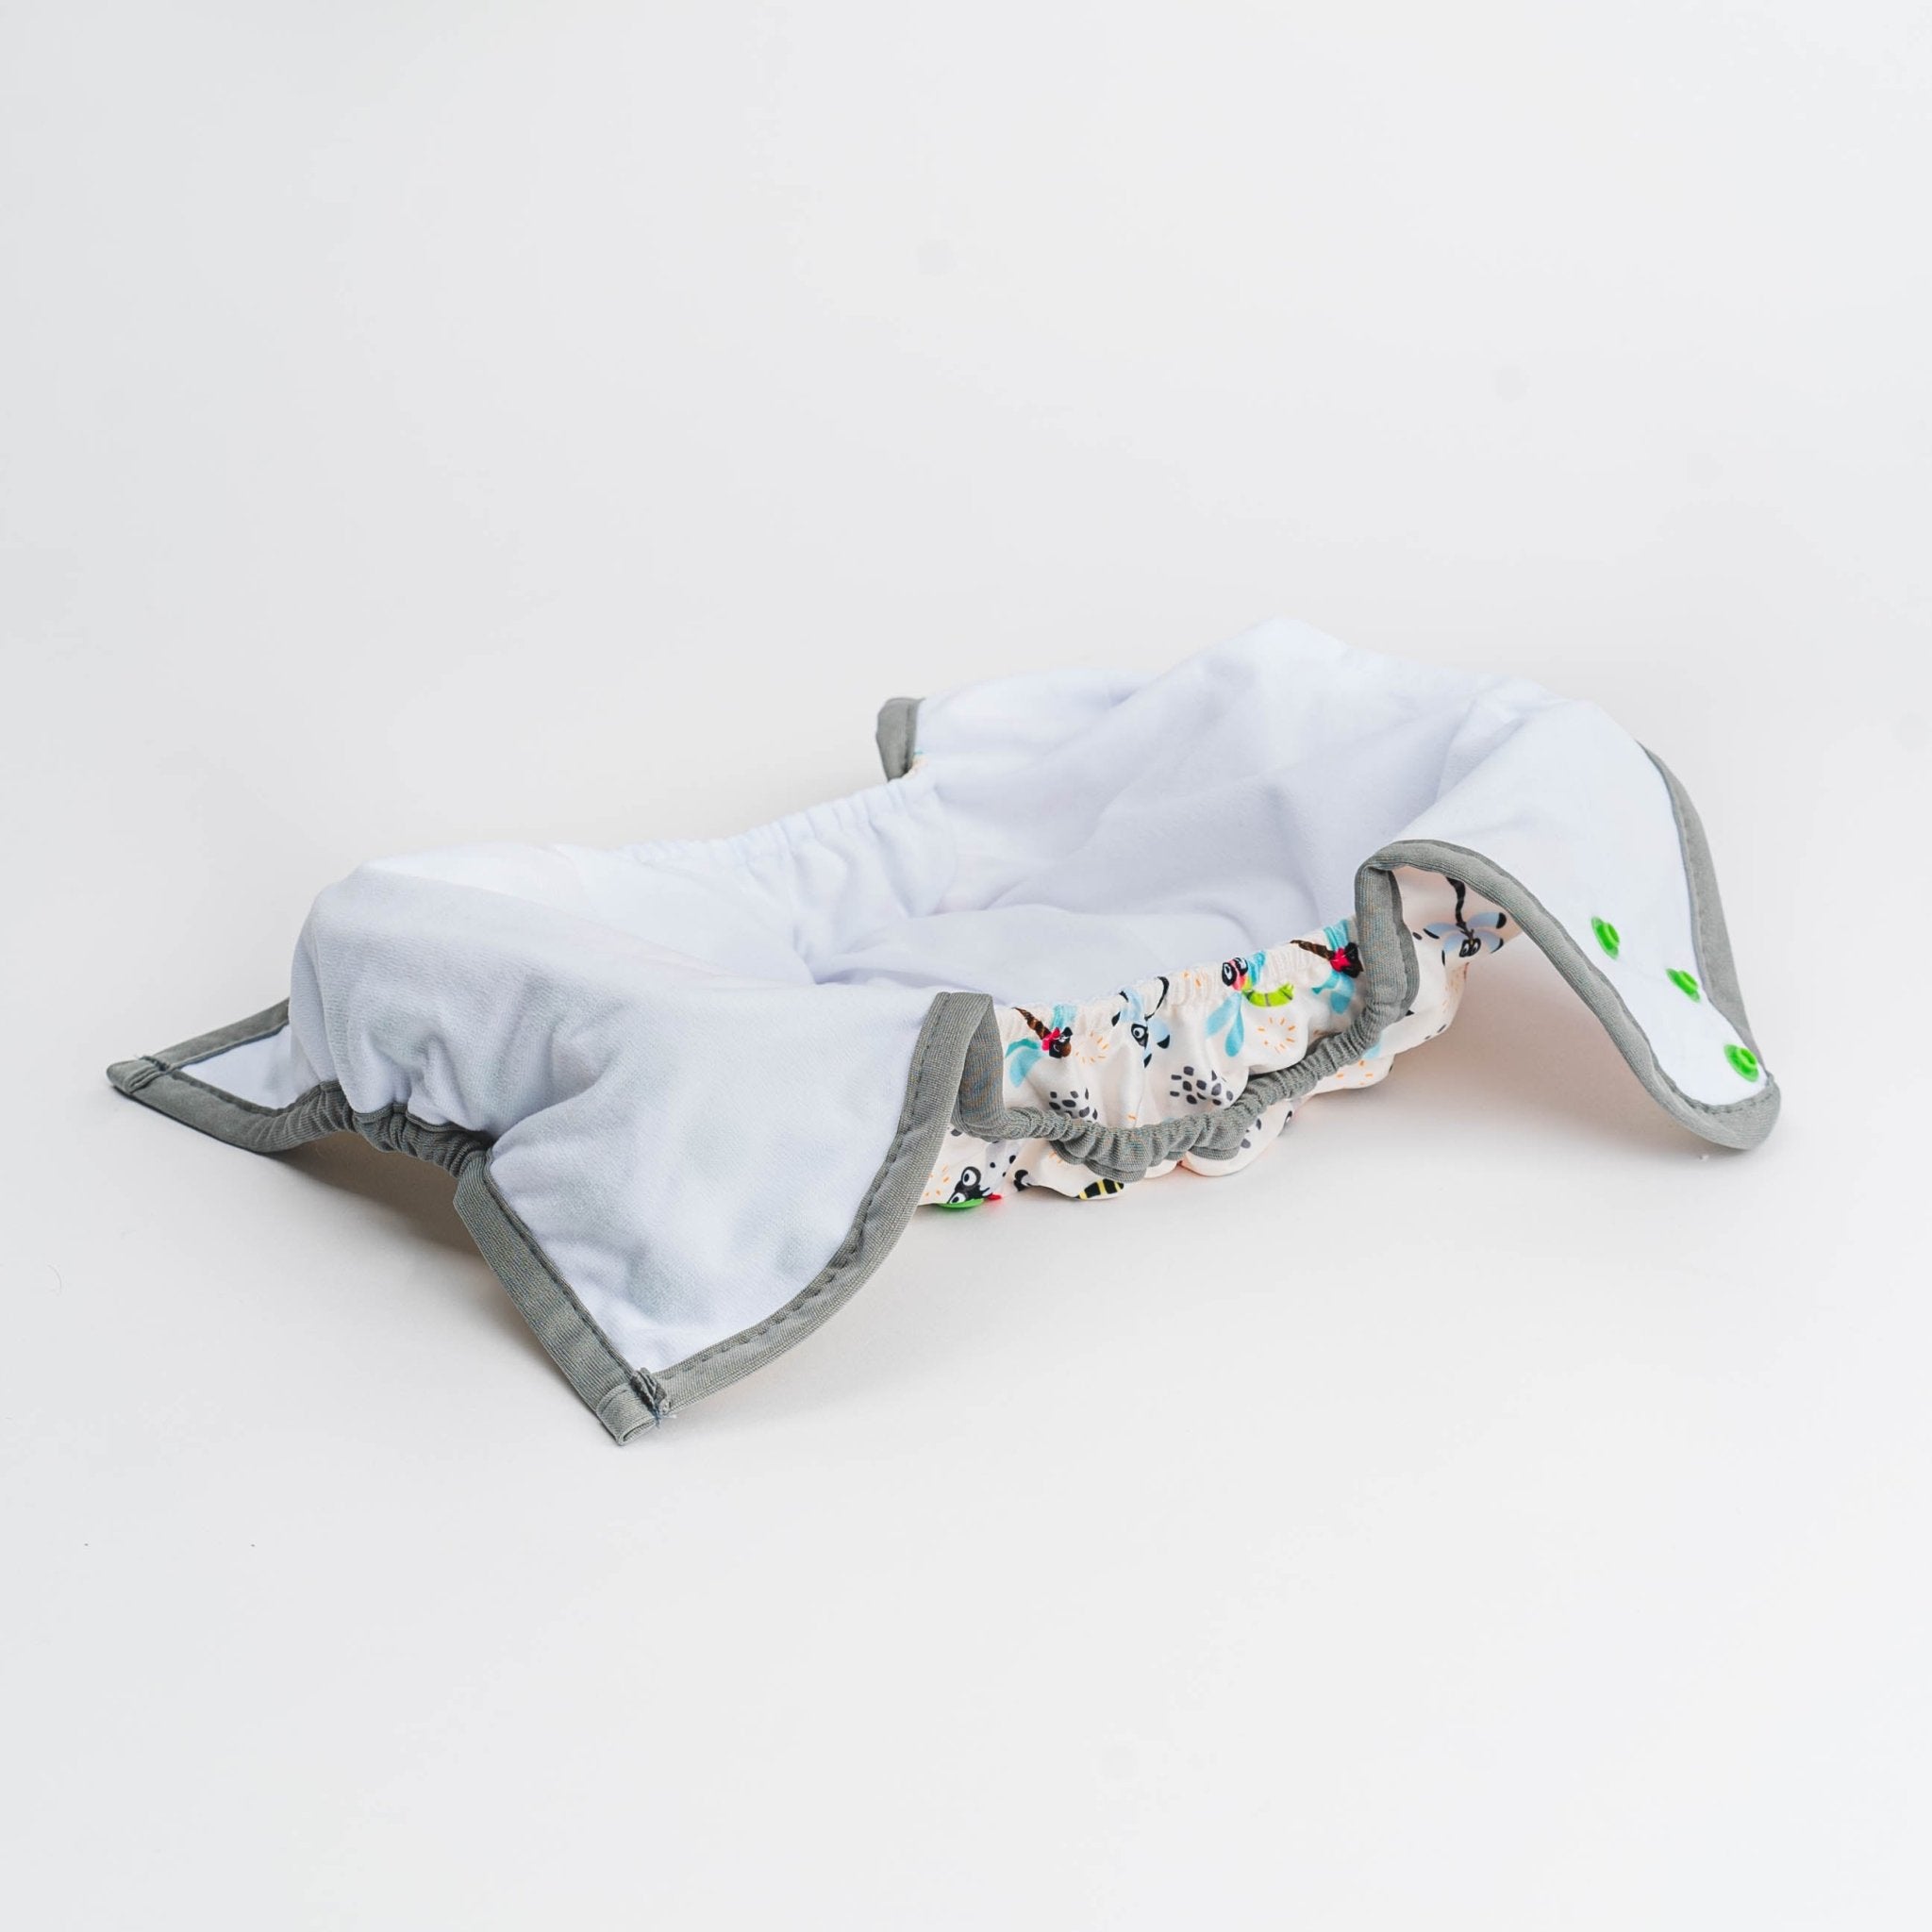 Modern Cloth Nappy Leak Protection - Happy Dragon - Kidsaroo